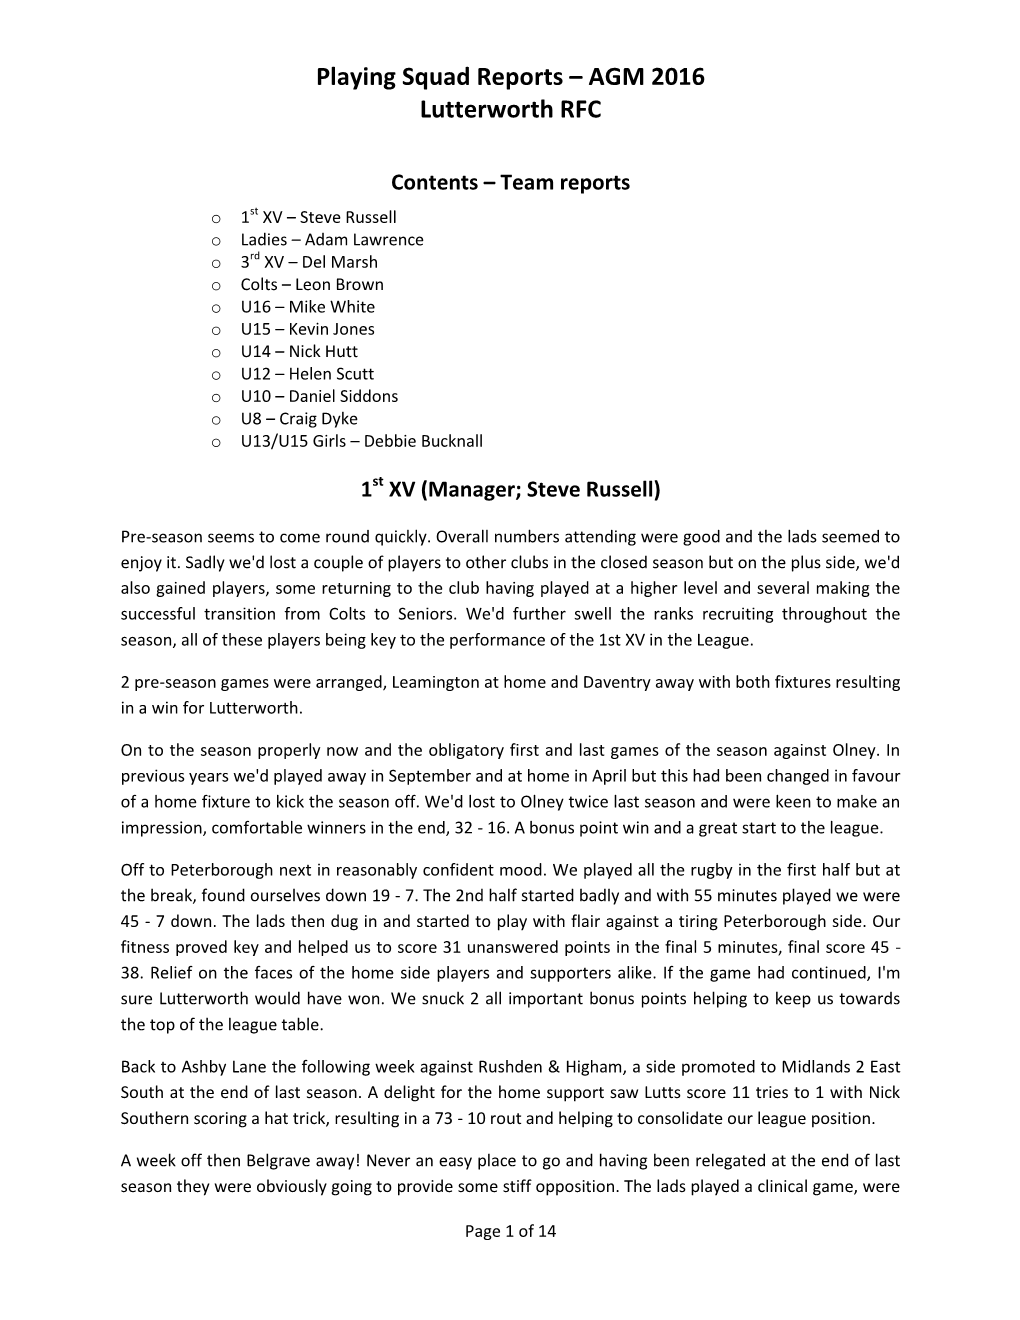 Playing Squad Reports – AGM 2016 Lutterworth RFC